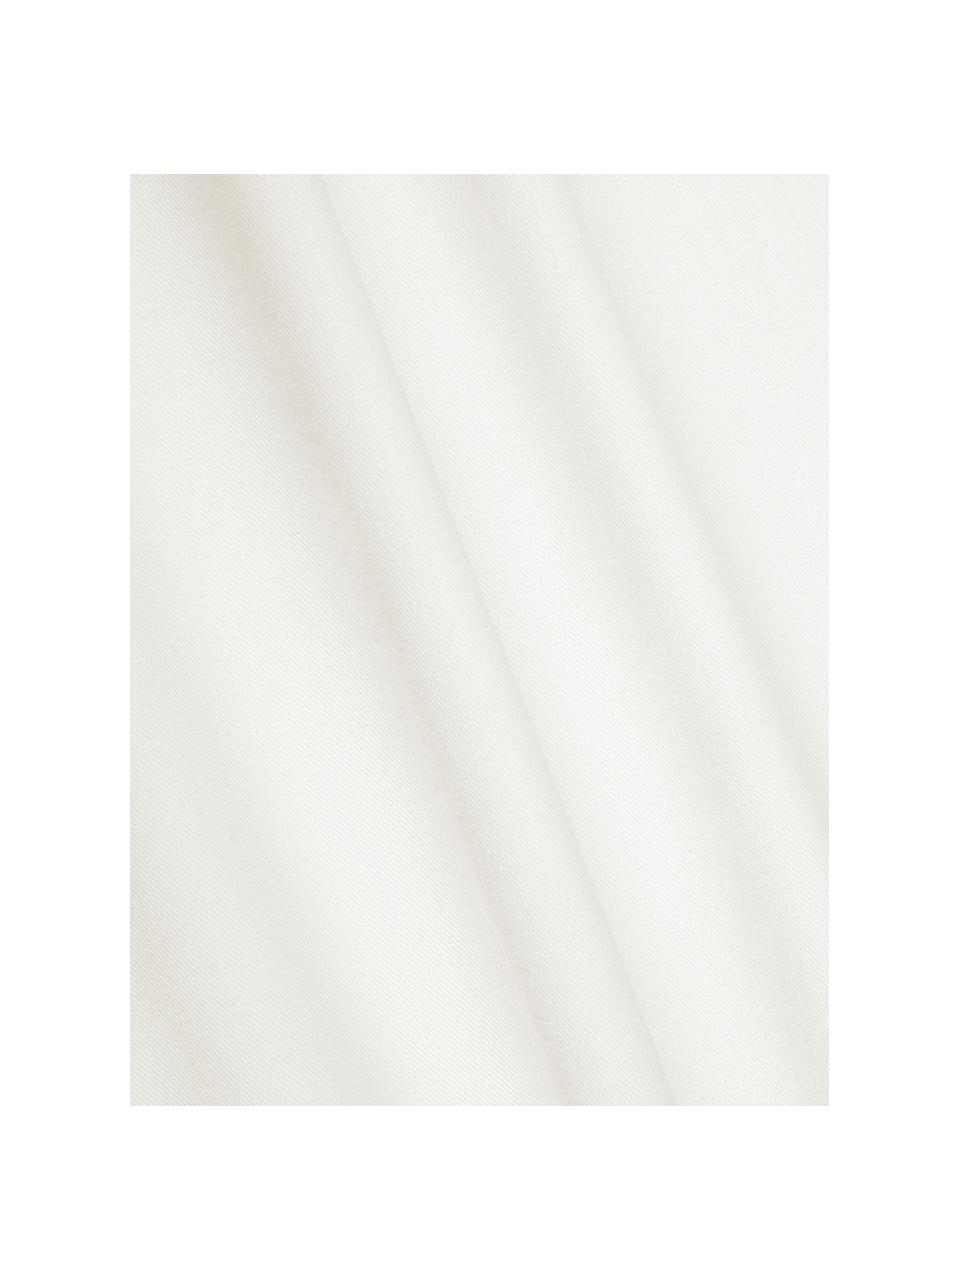 Federa arredo in cotone bianco Mads, 100% cotone, Bianco, Larg. 40 x Lung. 40 cm